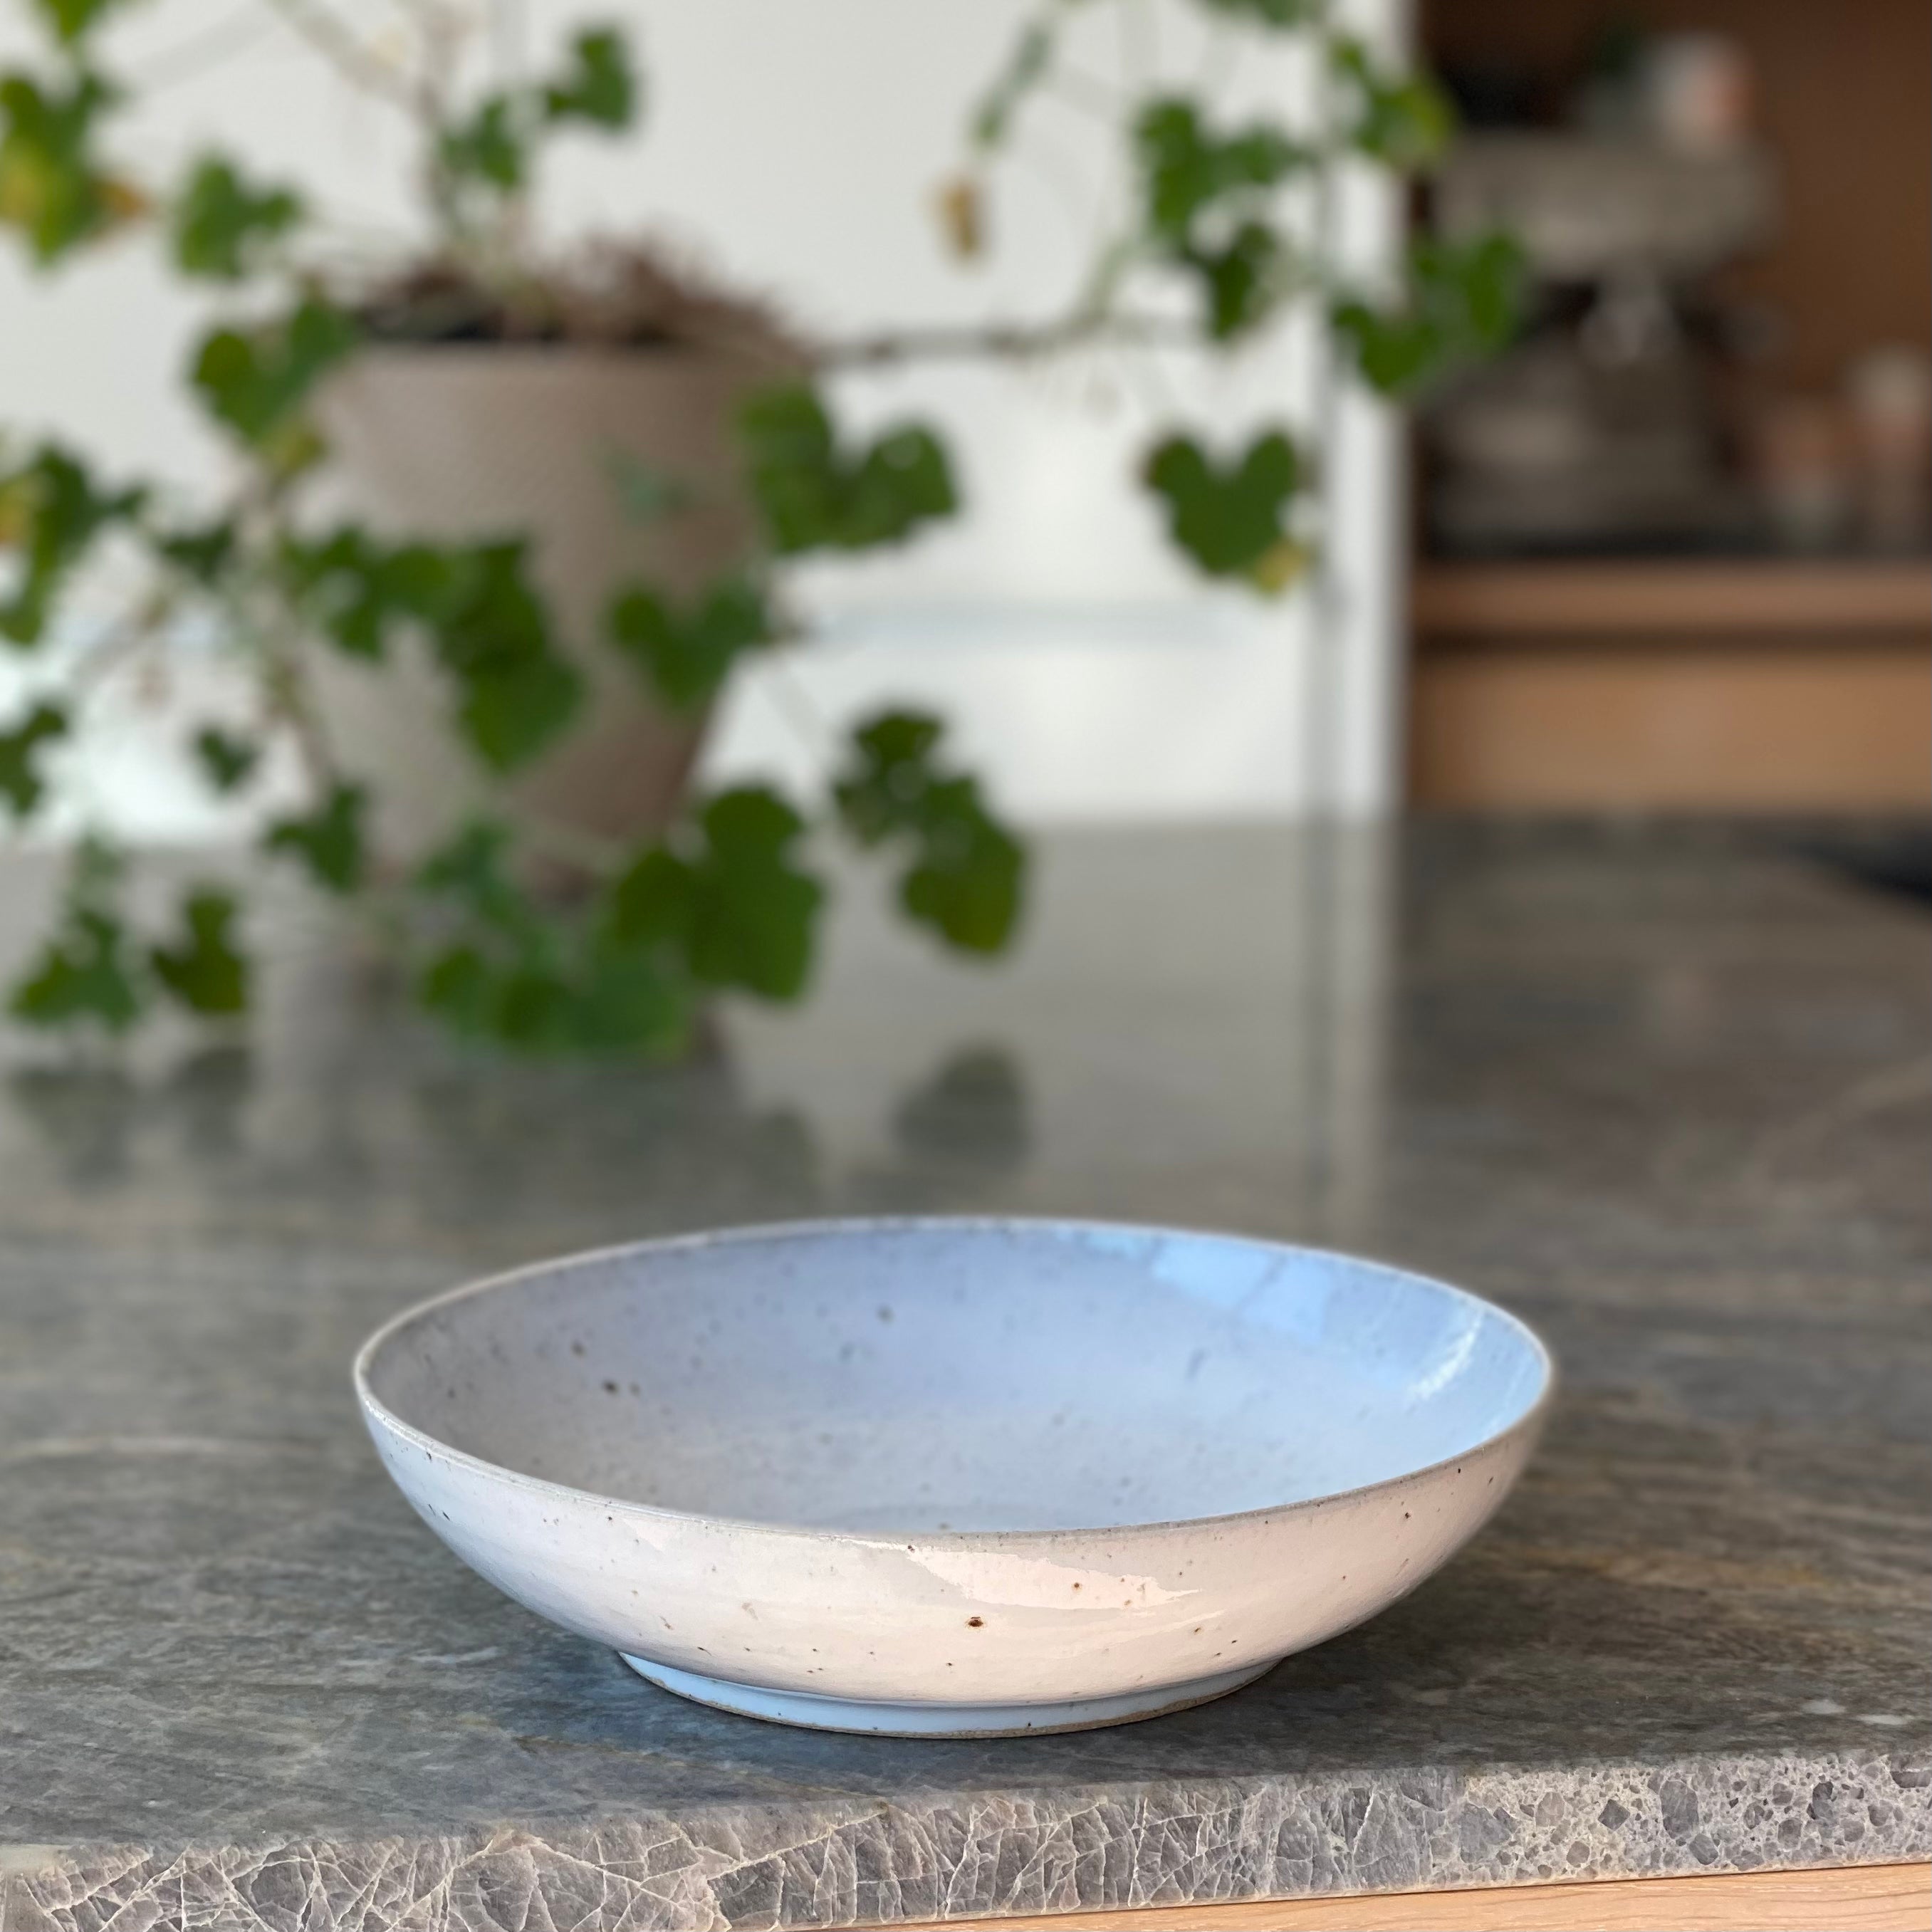 Tasja P poke bowl - white and light blue